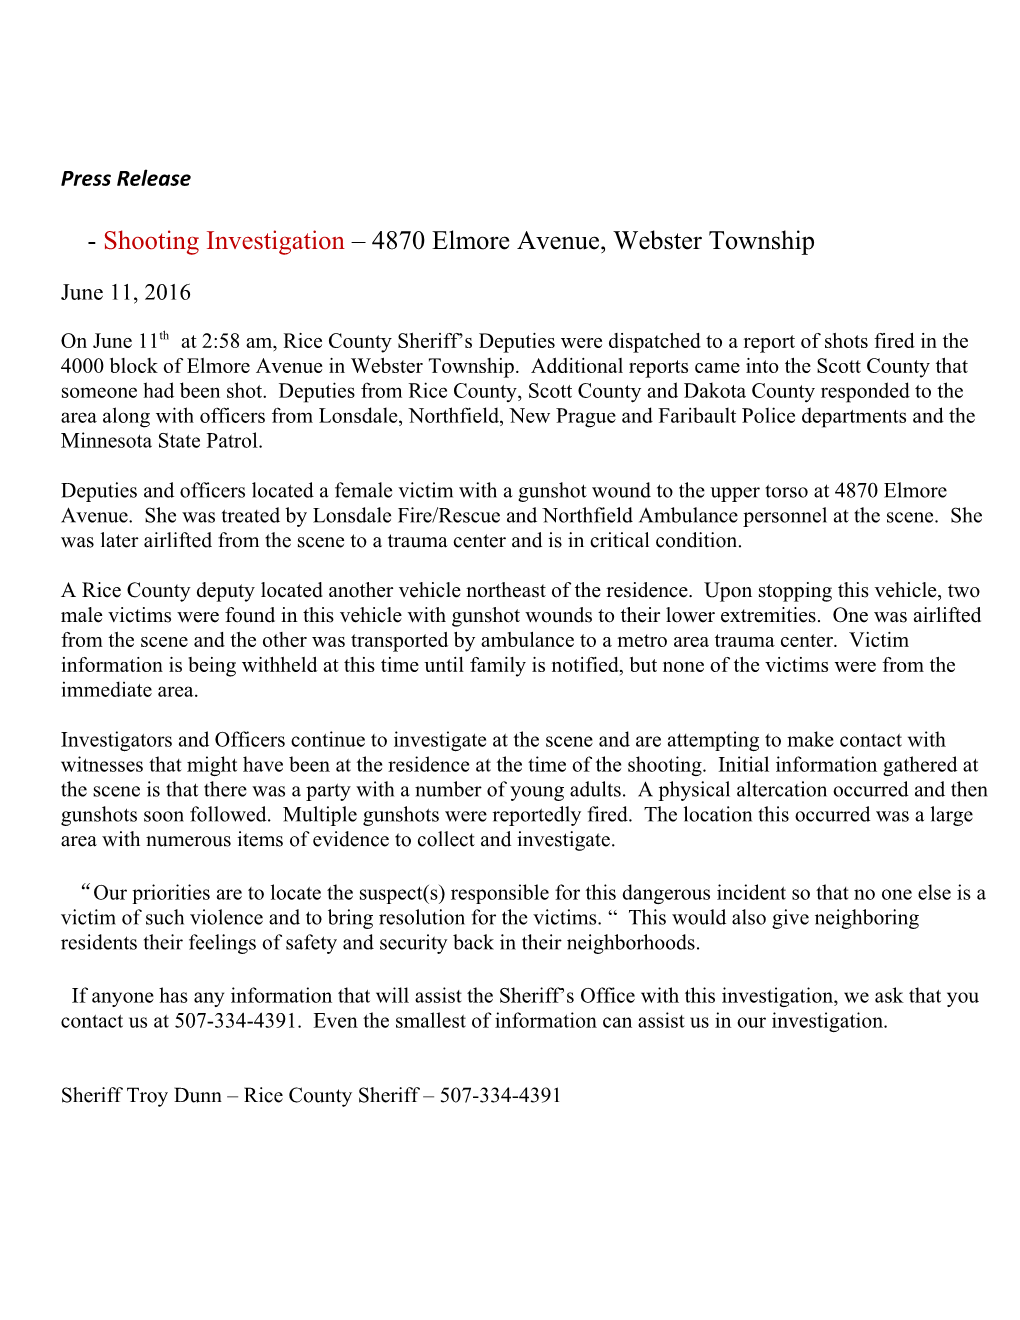 Shooting Investigation 4870 Elmore Avenue, Webster Township